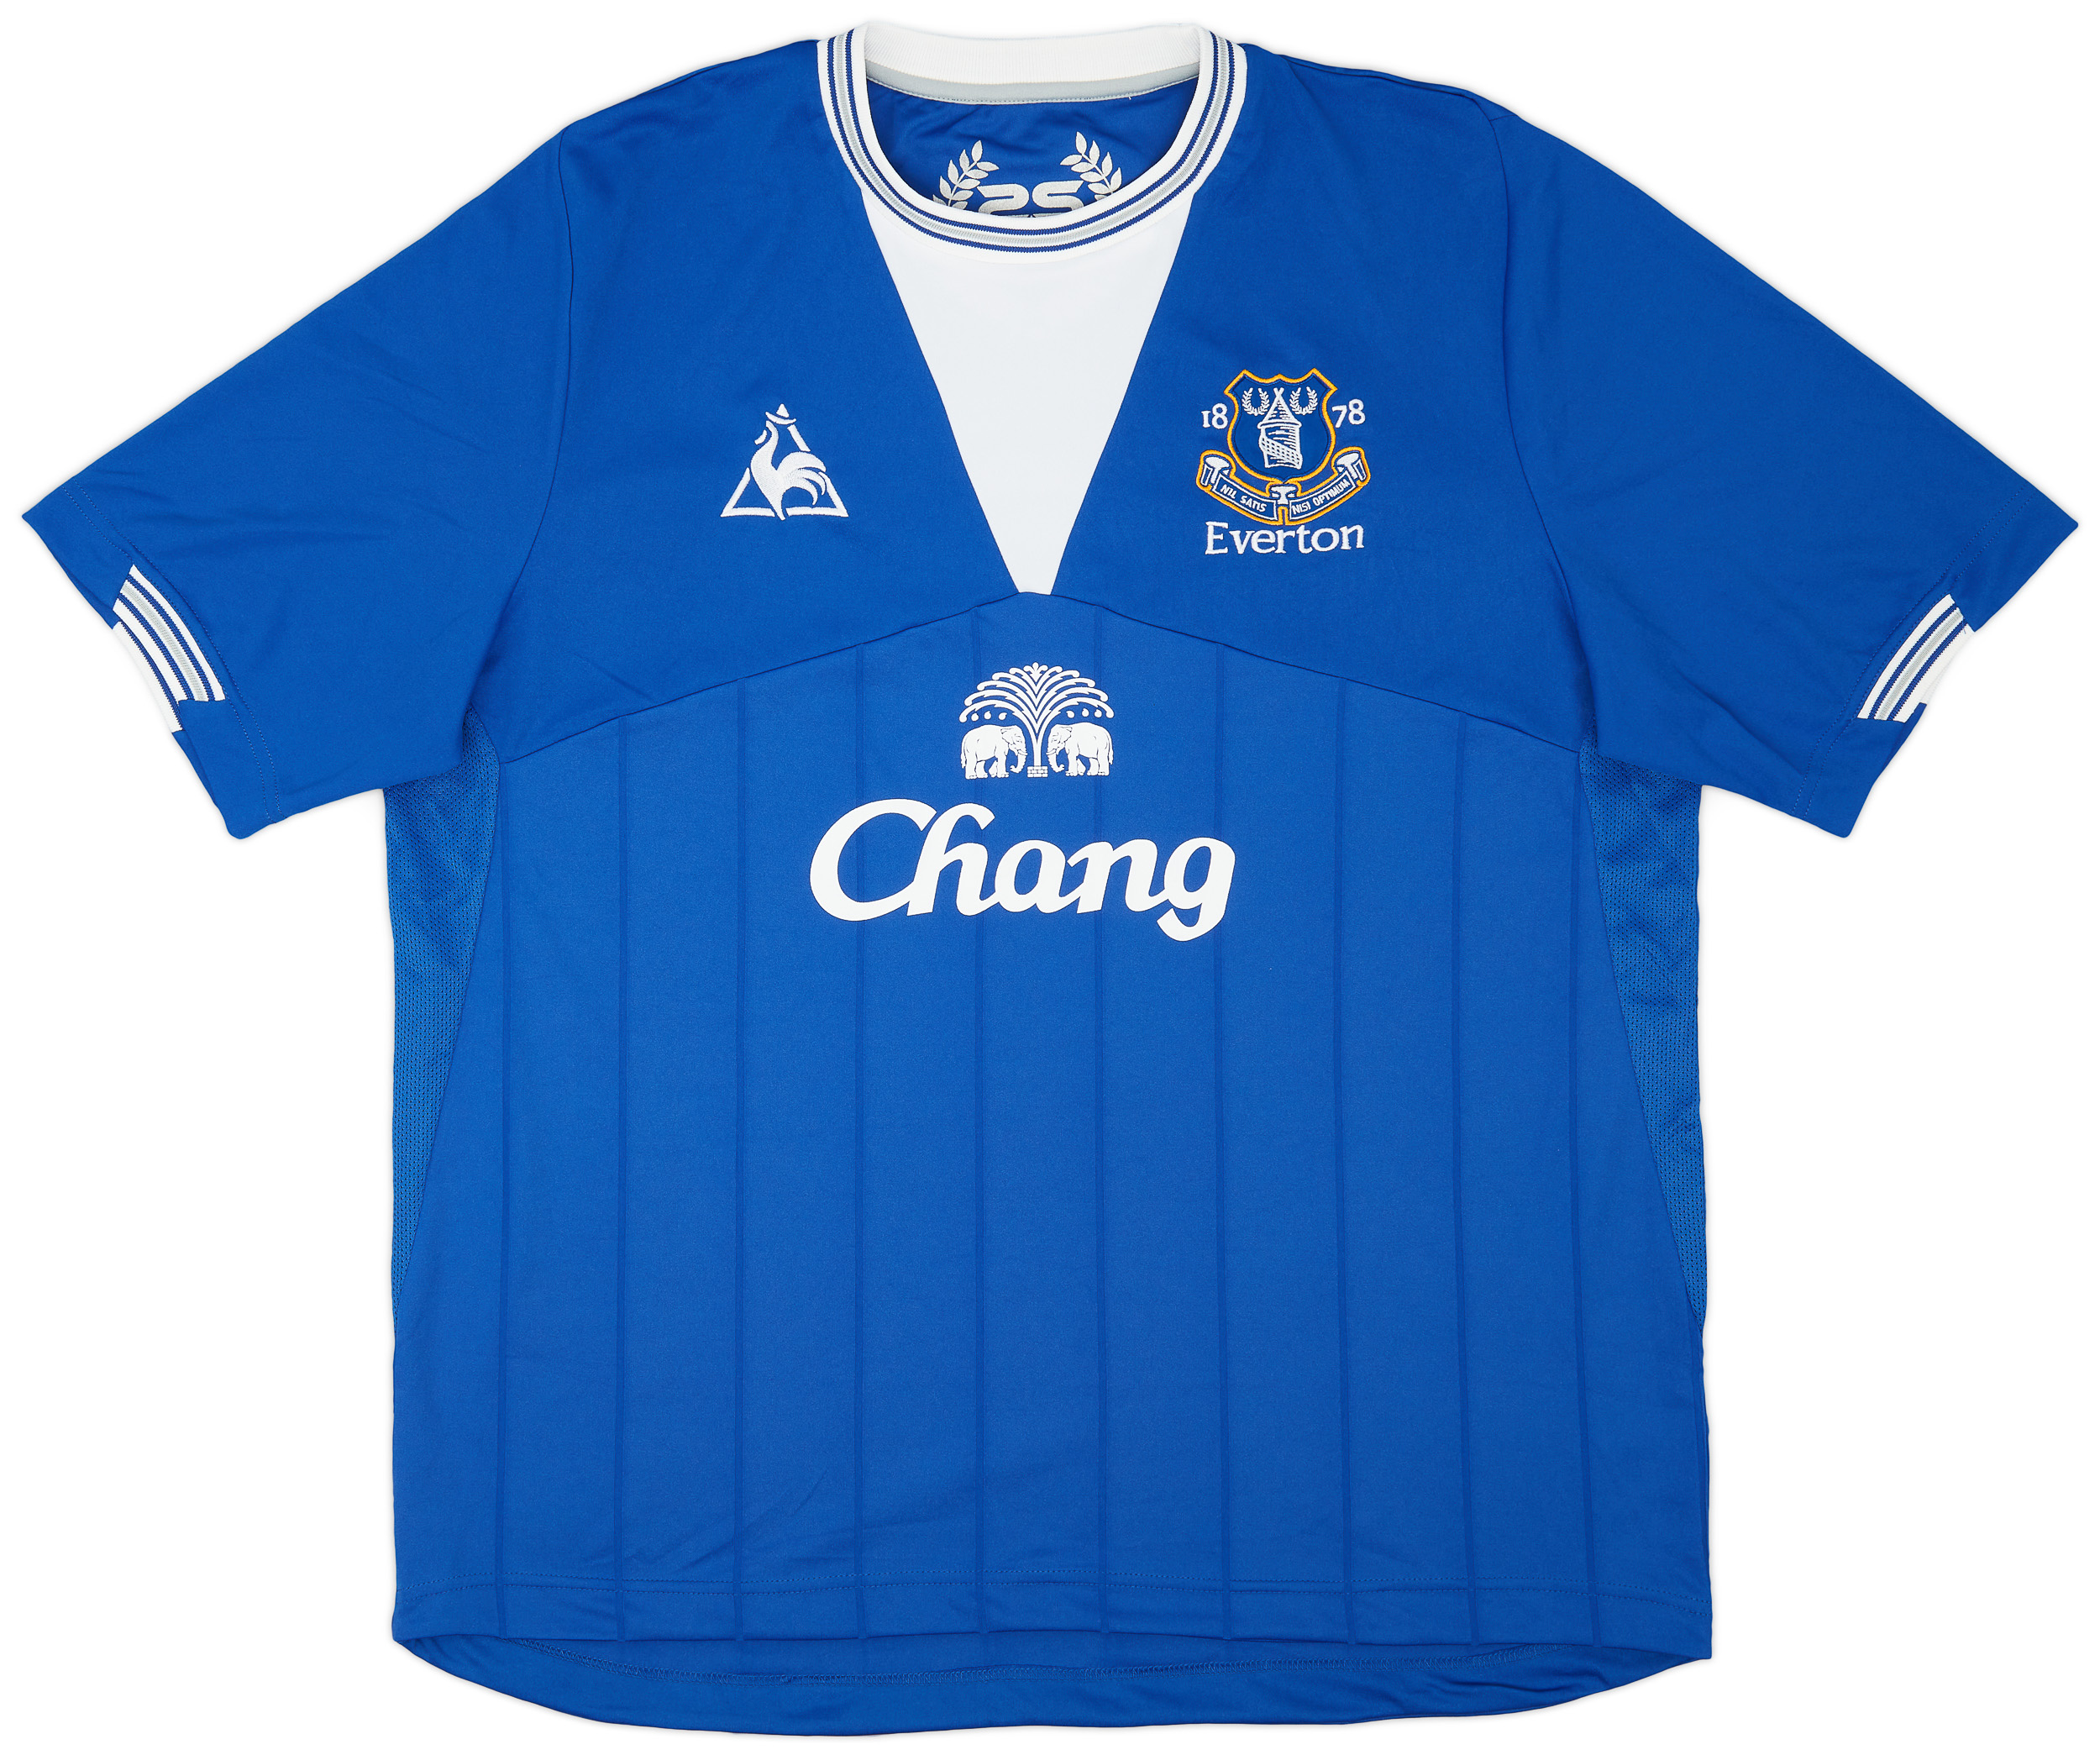 2009-10 Everton Home Shirt - 10/10 - ()